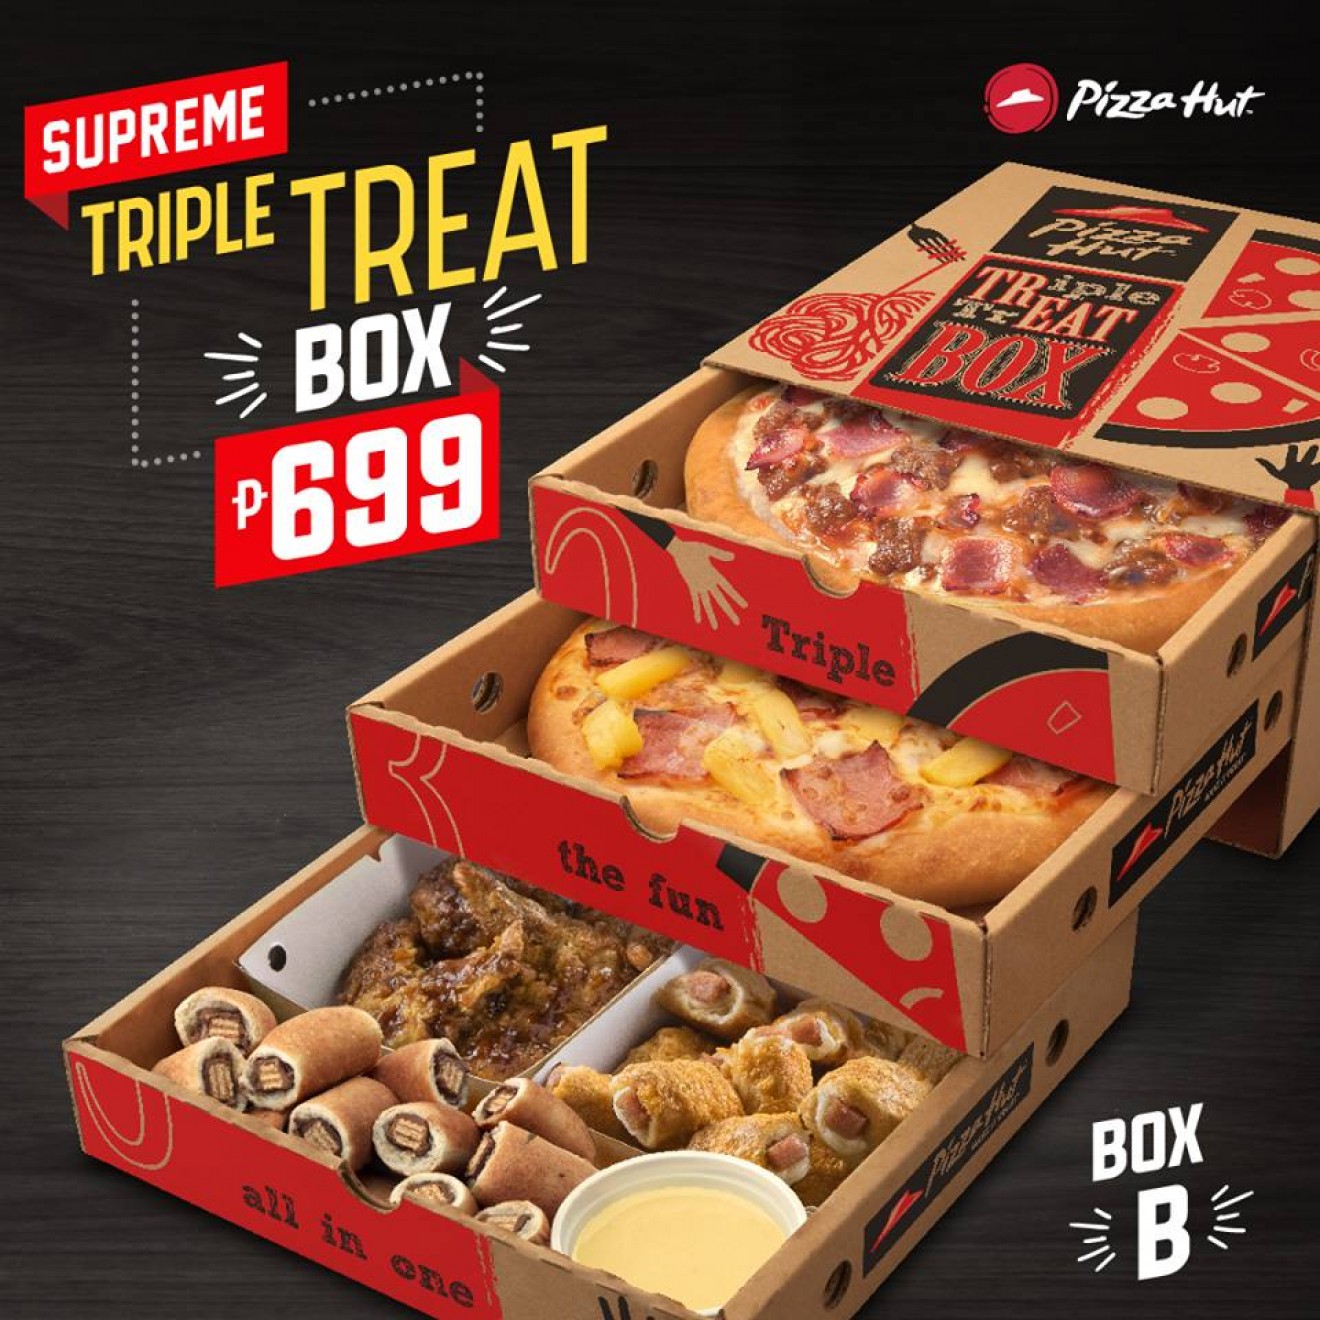 Pizza Hut Supreme Triple Treat Box 1320x1320 1539075825 